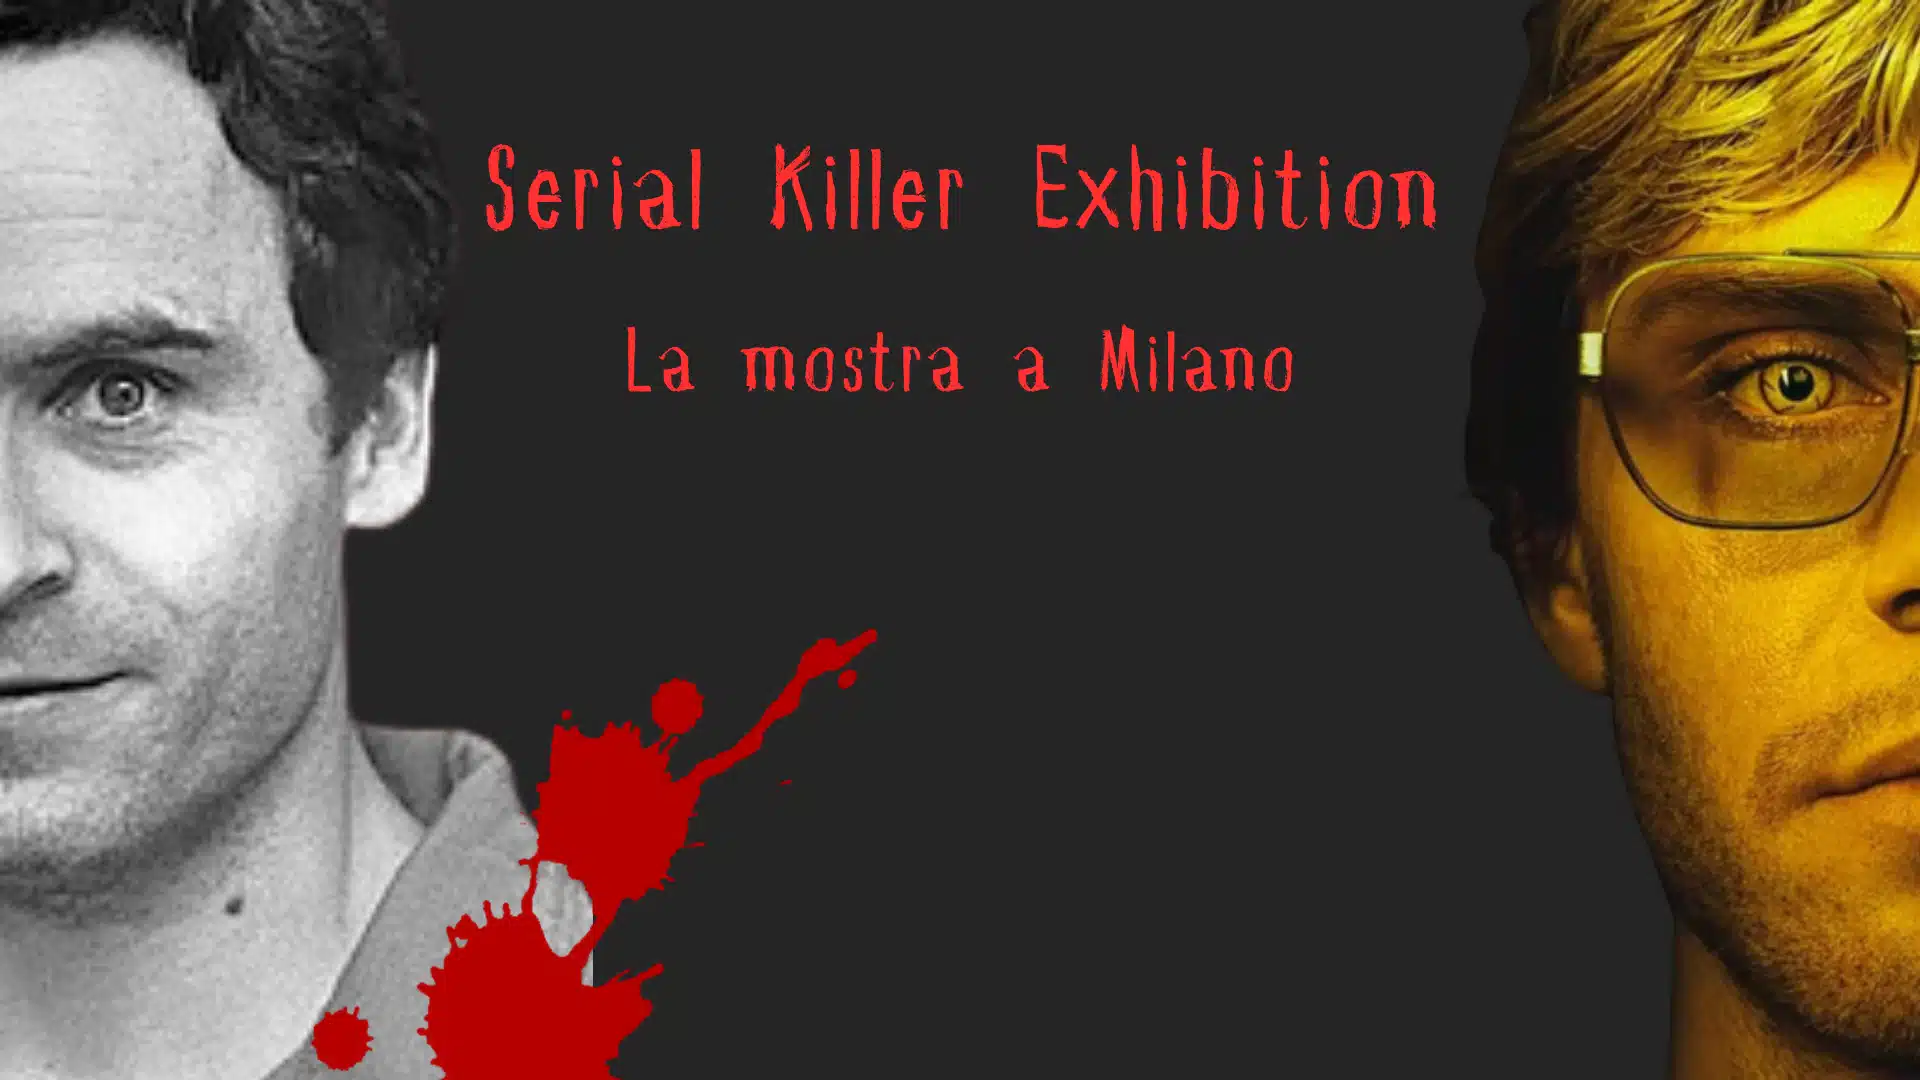 Serial Killer Exhibition Milano: La mostra sui serial killer più famosi al mondo